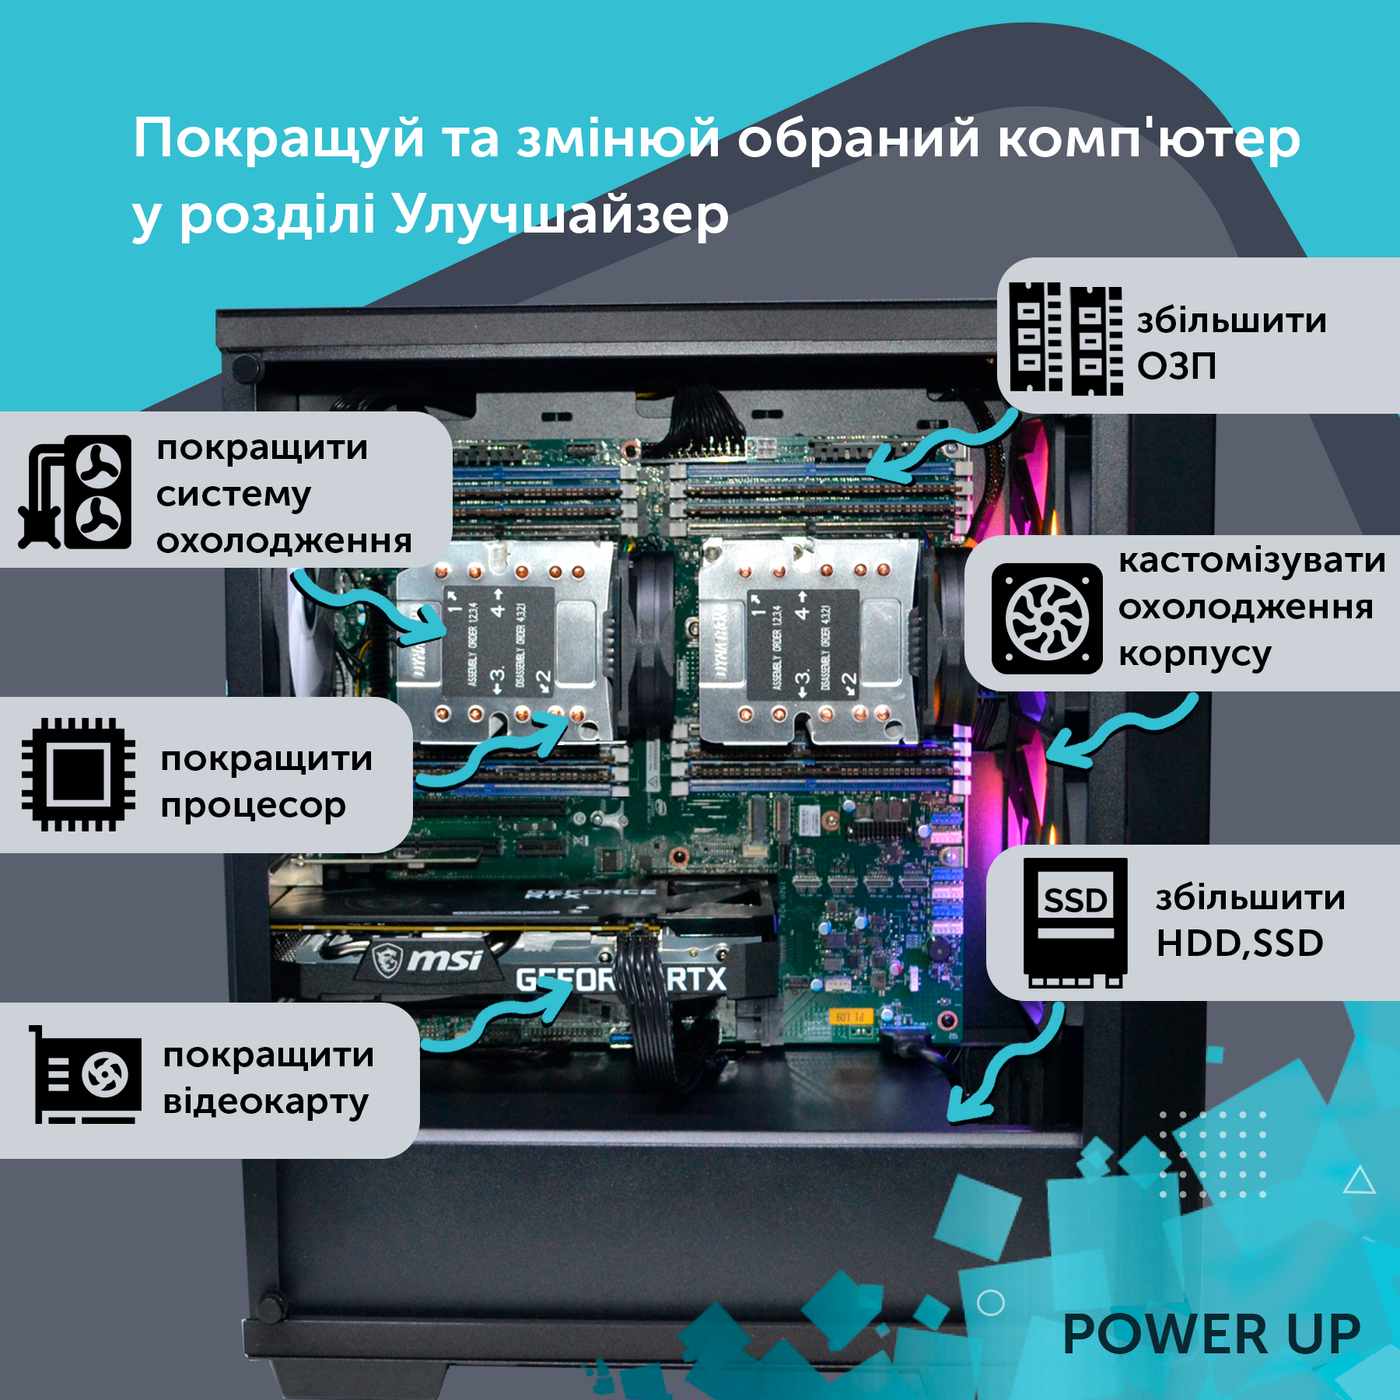 Робоча станція PowerUp Desktop #344 Core i5 14500F/64 GB/SSD 1TB/NVIDIA Quadro RTX A4000 16GB